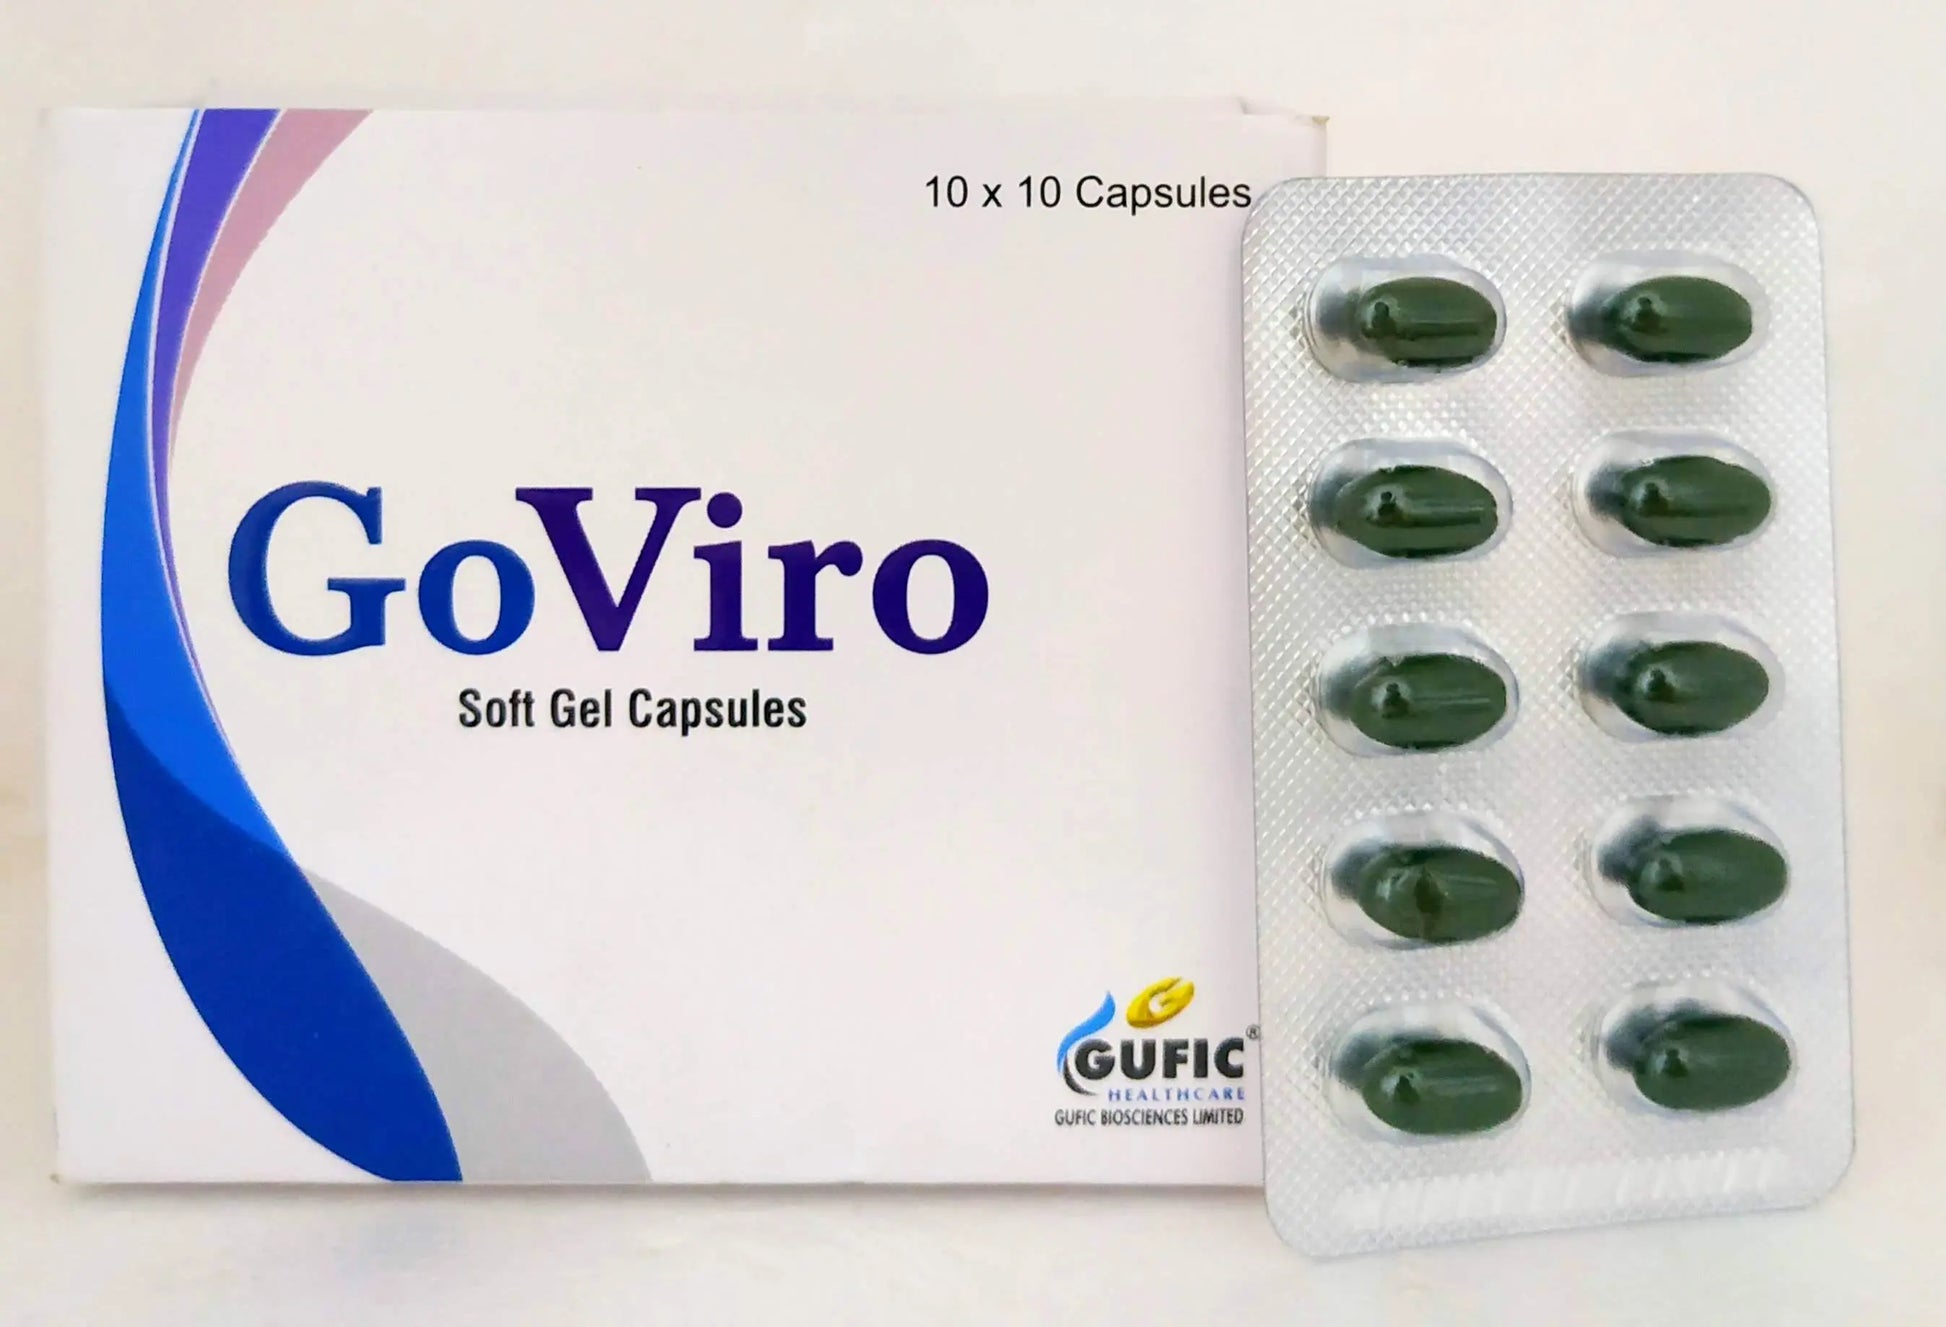 Goviro Capsules - 10Capsules Gufic